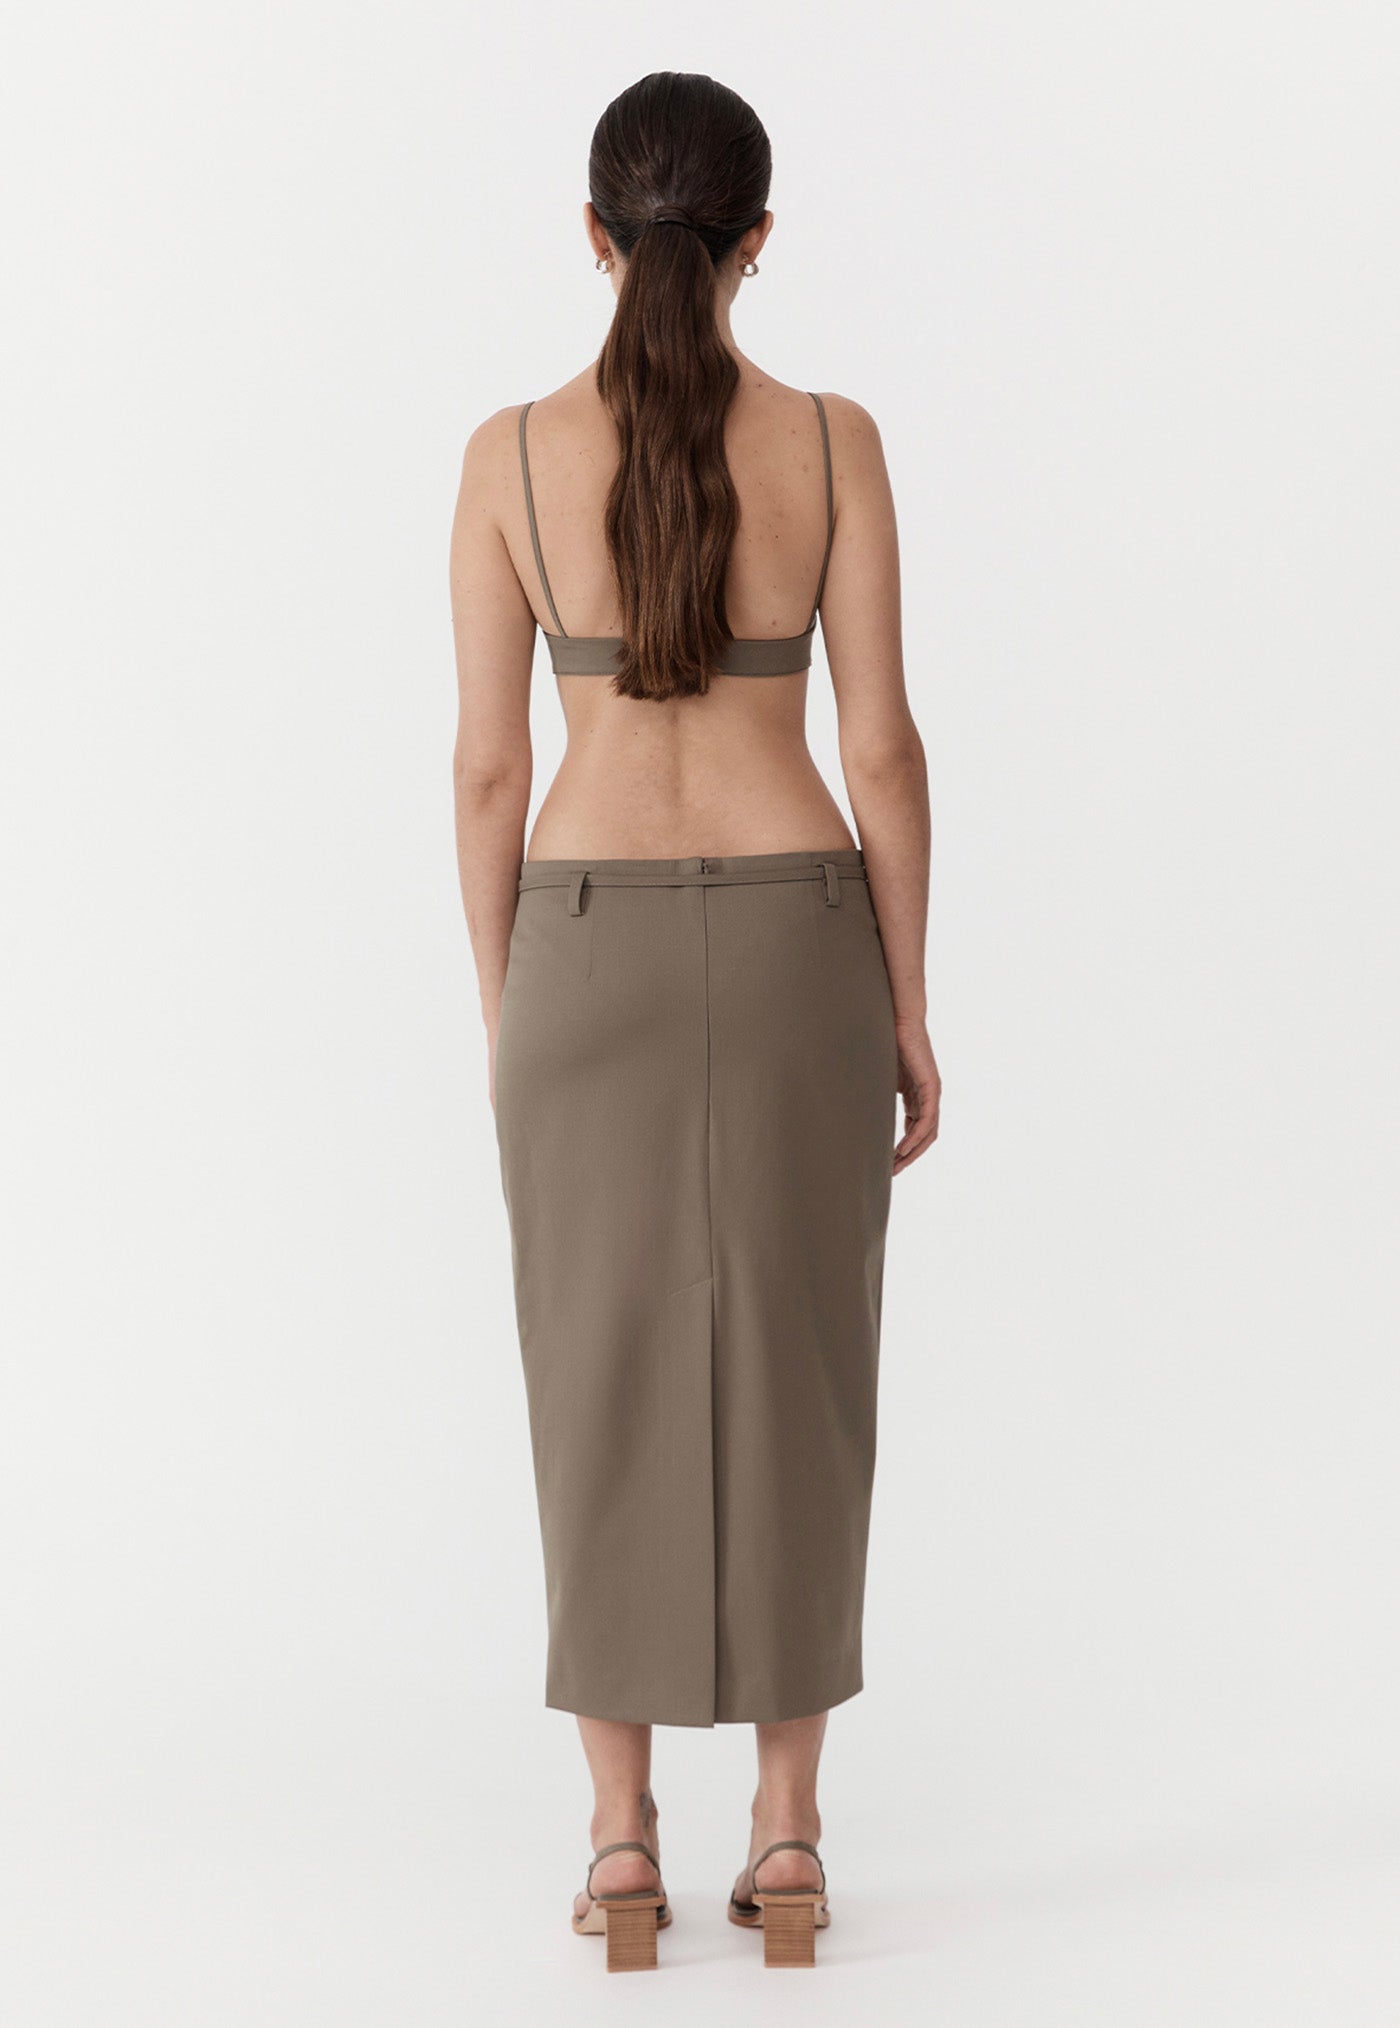 Belted Pencil Skirt - Kelp sold by Angel Divine